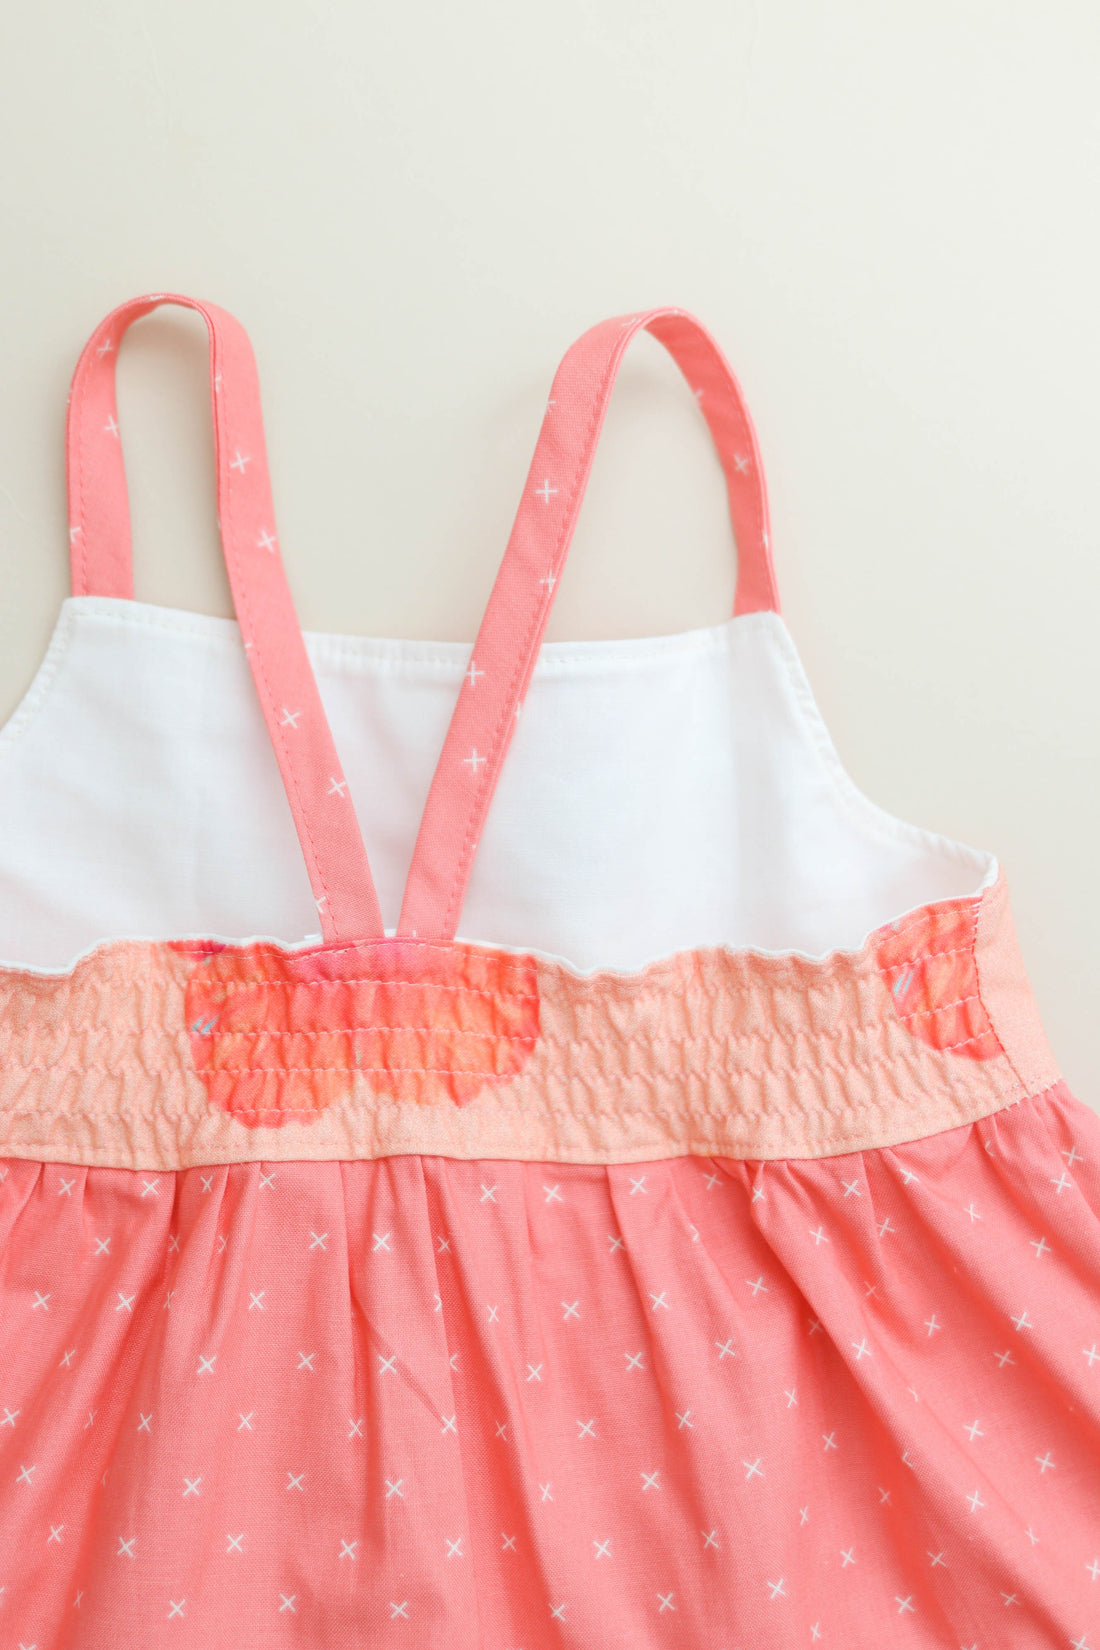 Girls Dress - Hibiscus Dress Bright Pink - Toddler Dress - Baby Girl Dress - Made in Hawaii